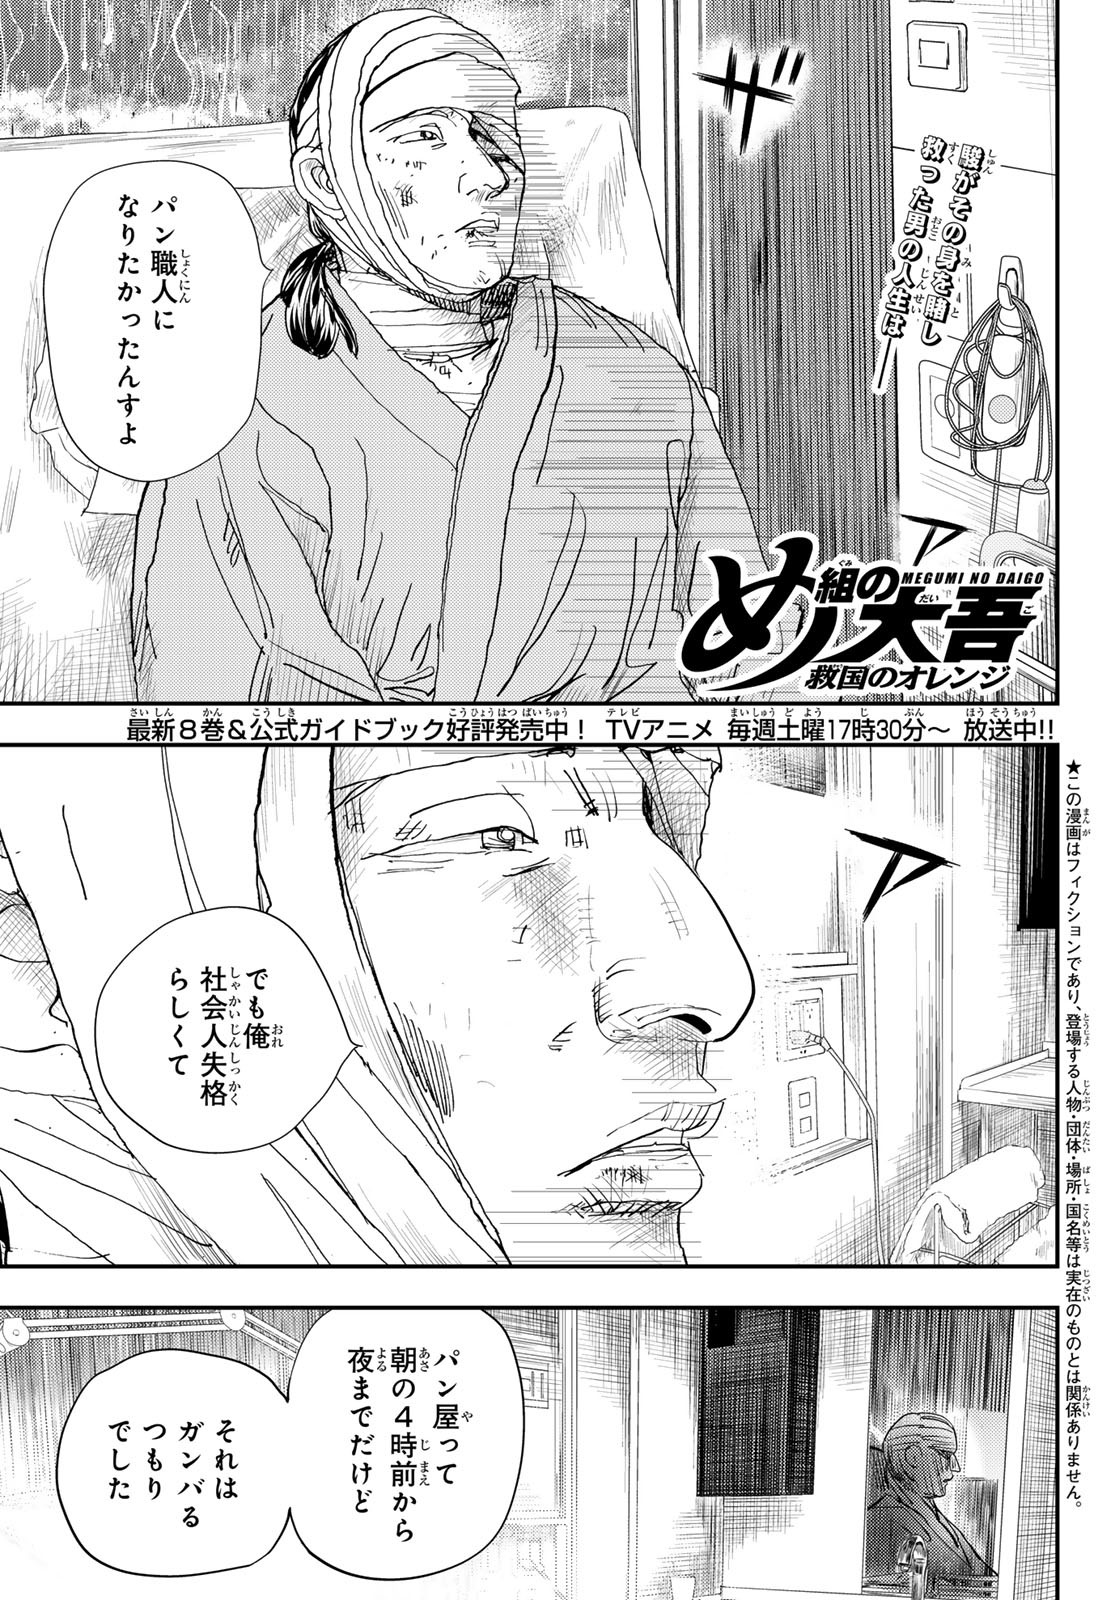 Megumi no Daigo - Chapter 33 - Page 1